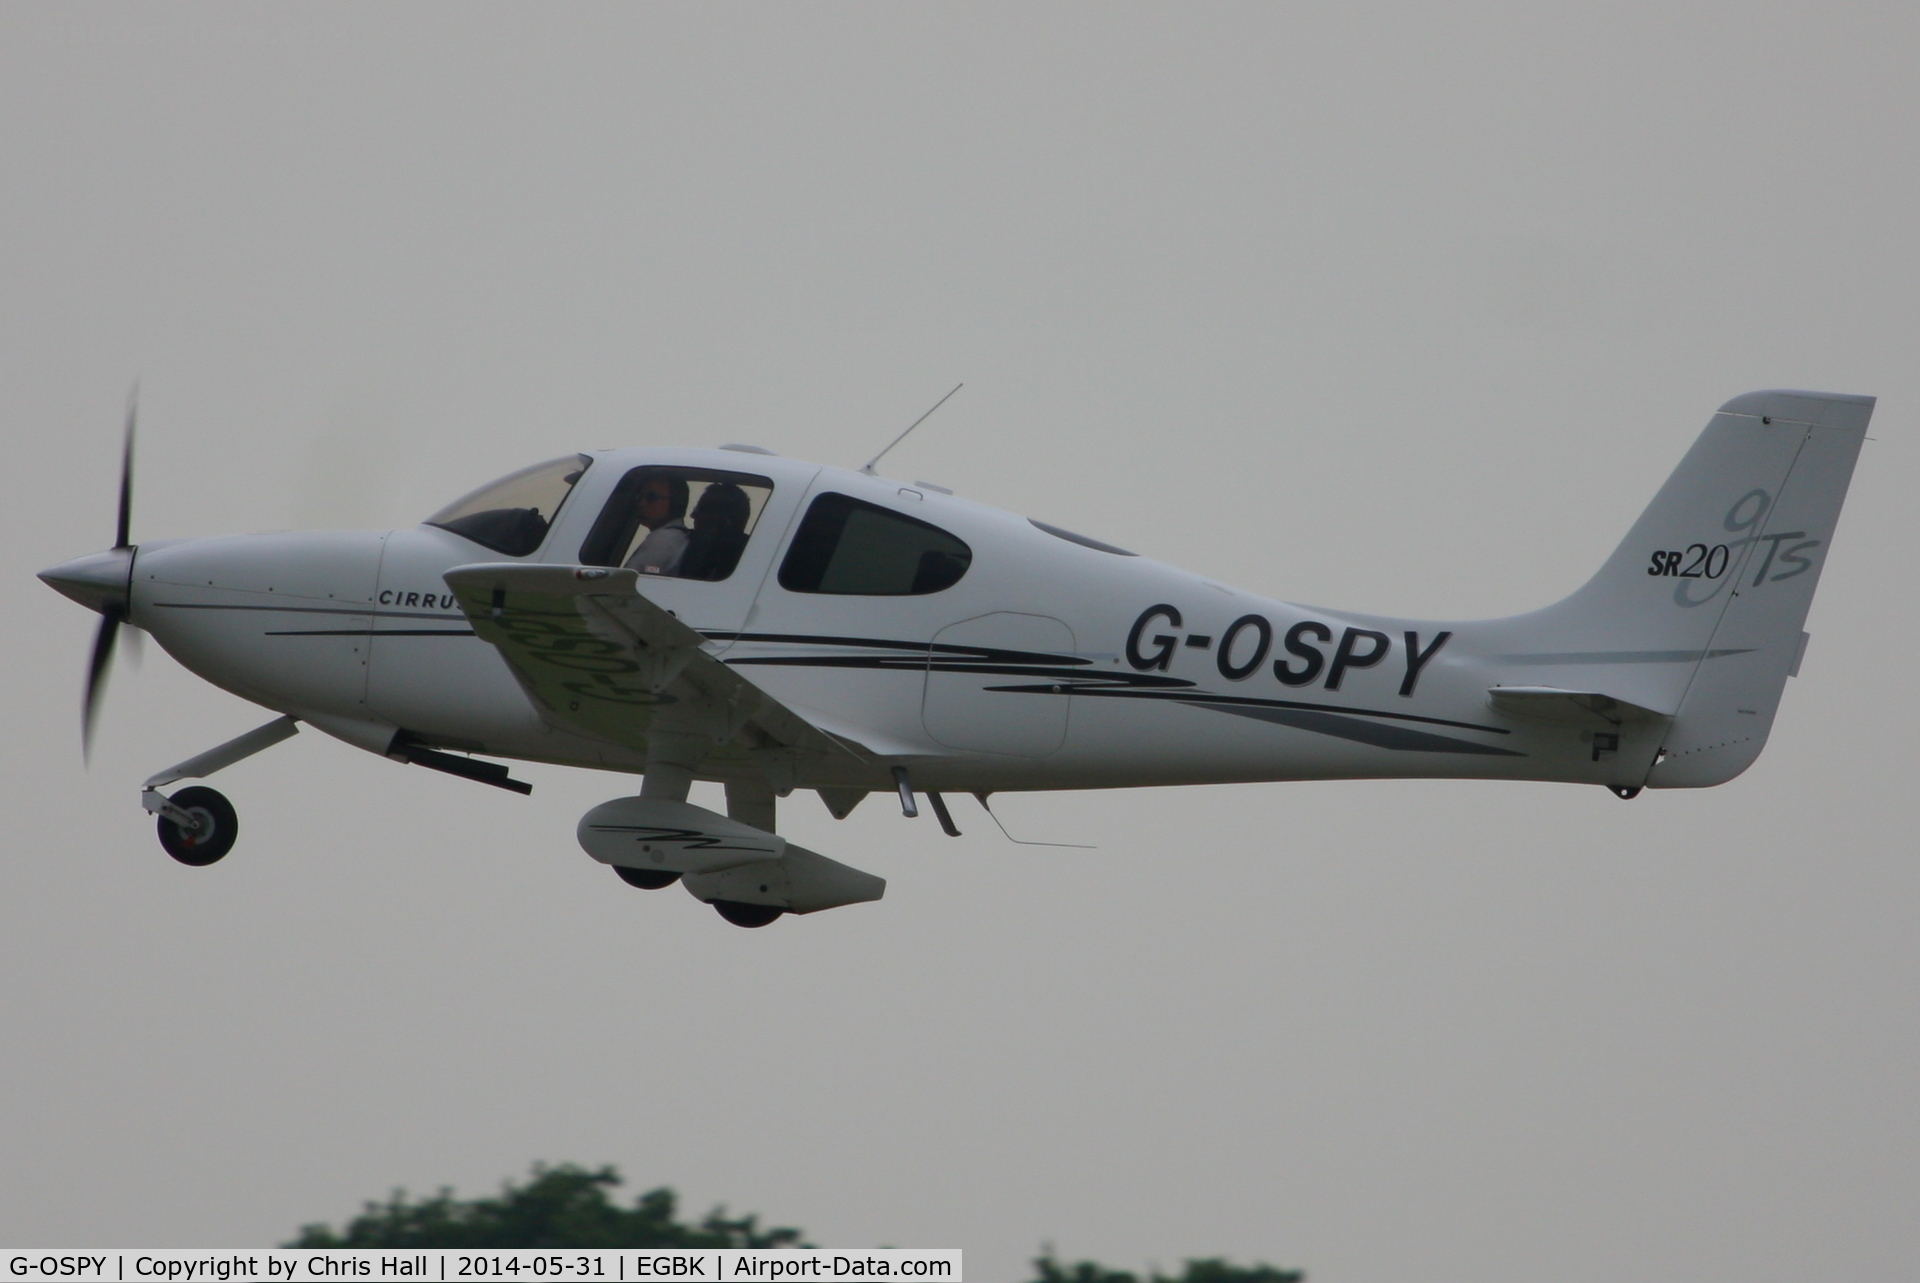 G-OSPY, 2005 Cirrus SR20 GTS C/N 1546, at AeroExpo 2014